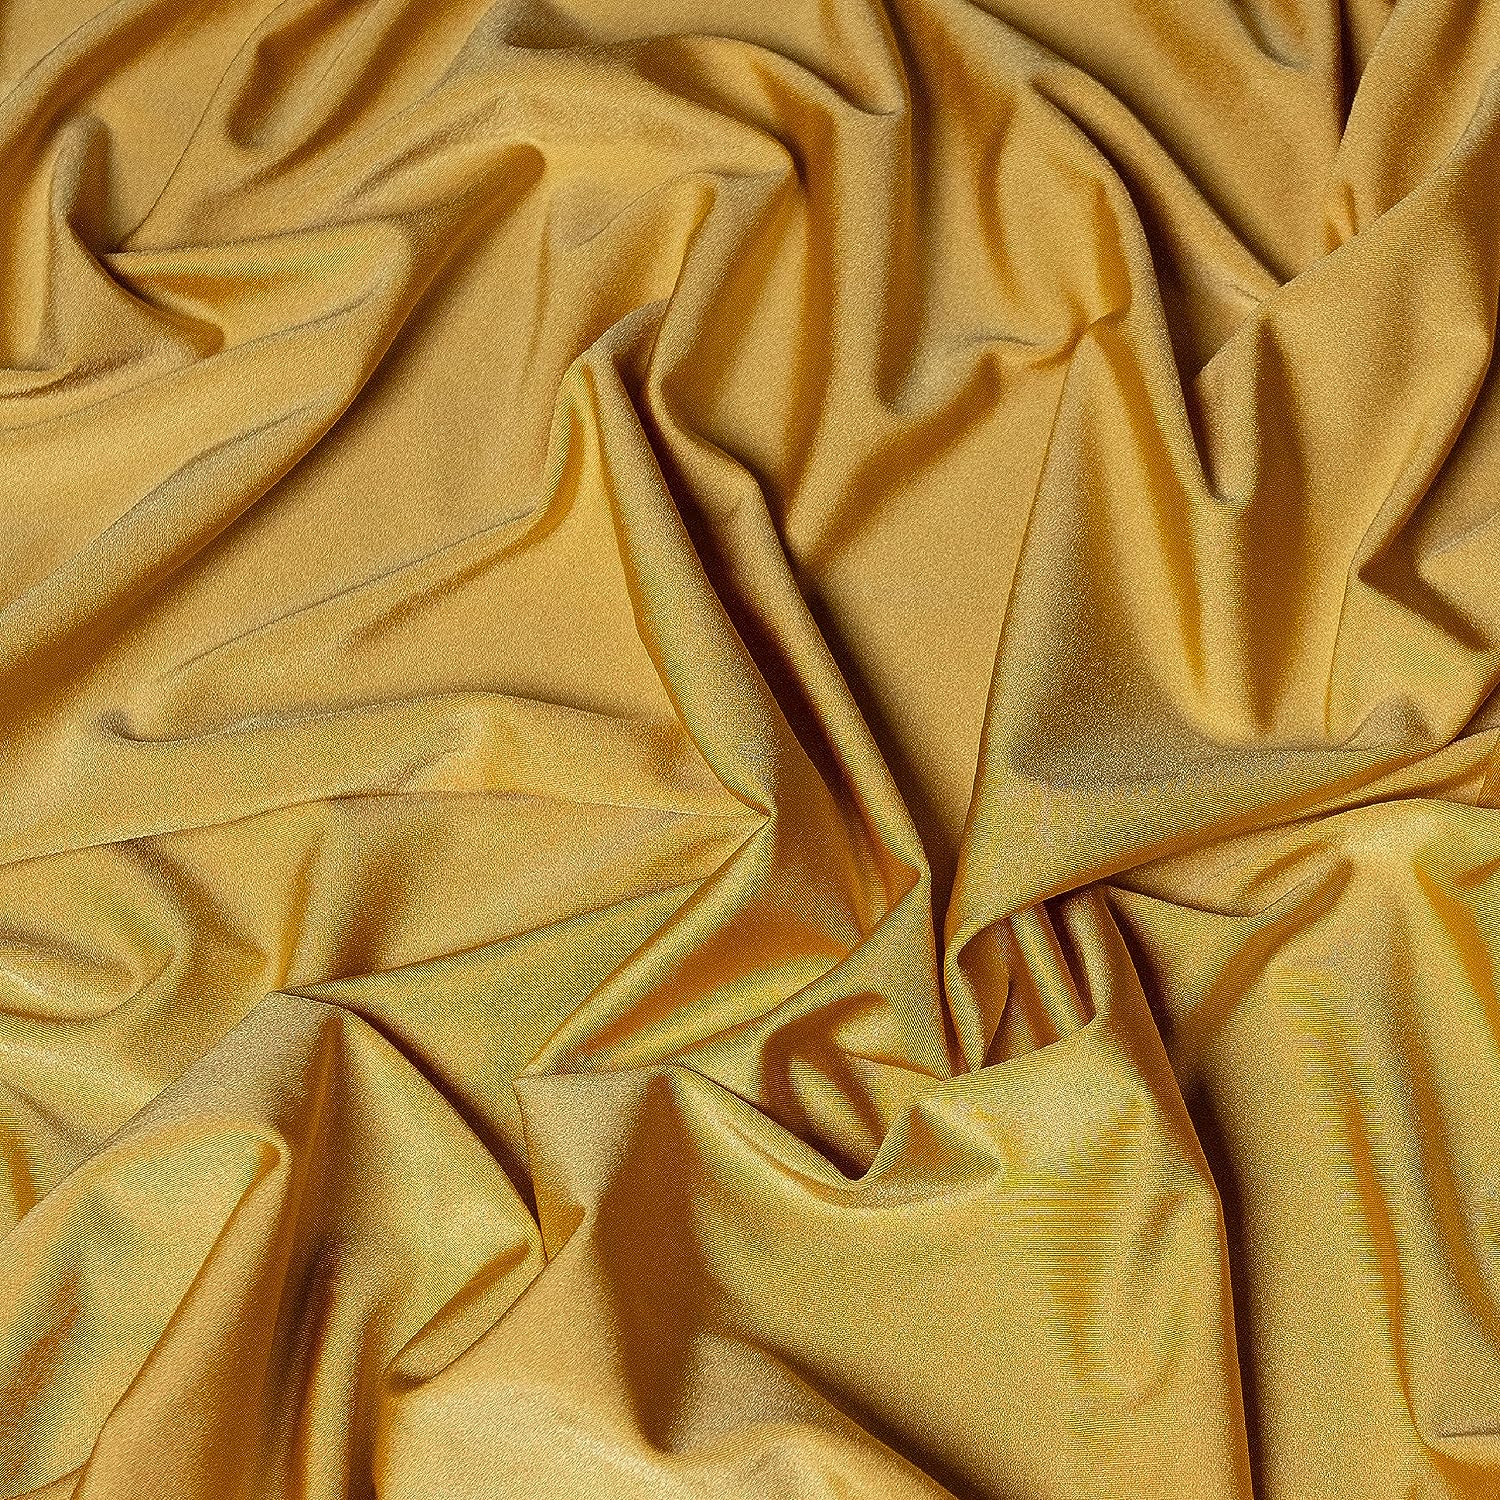 Dark Gold Luxury Nylon Spandex Fabric By The YardICE FABRICSICE FABRICSBy The Yard (58" Width)Dark Gold Luxury Nylon Spandex Fabric By The Yard ICE FABRICS